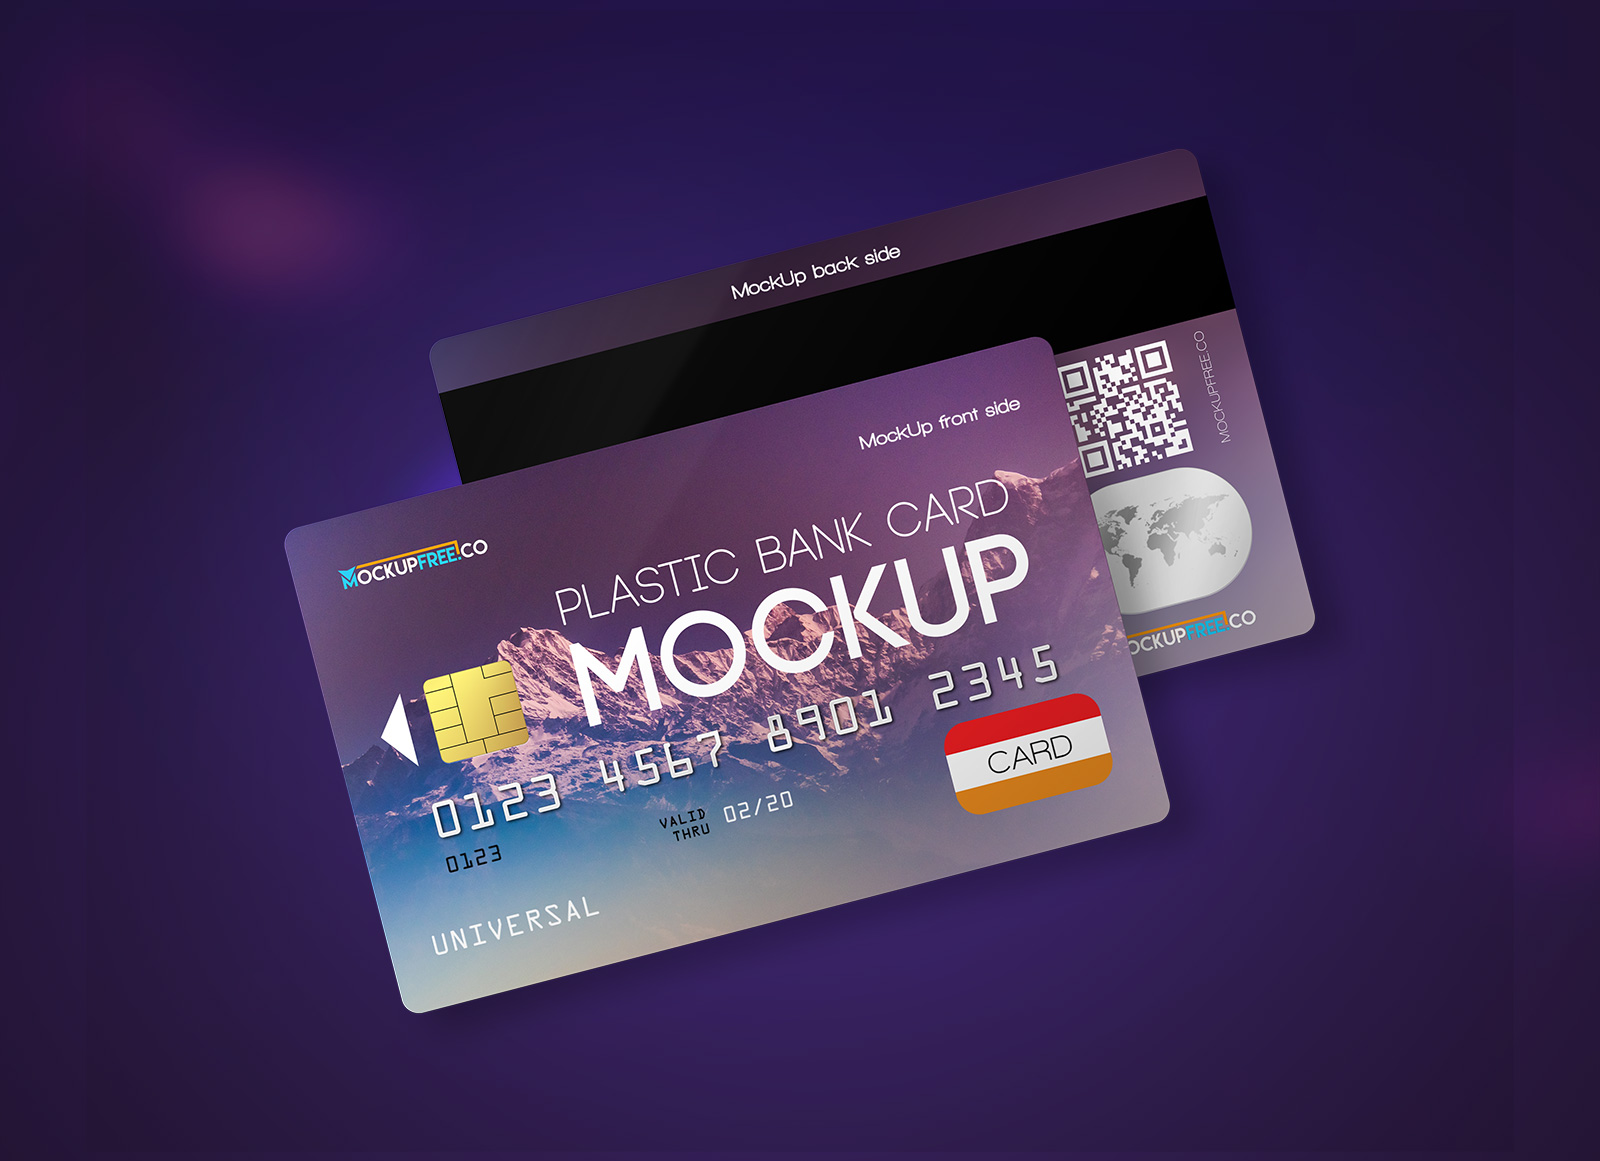 Maqueta de tarjetas bancarias de crédito / débito